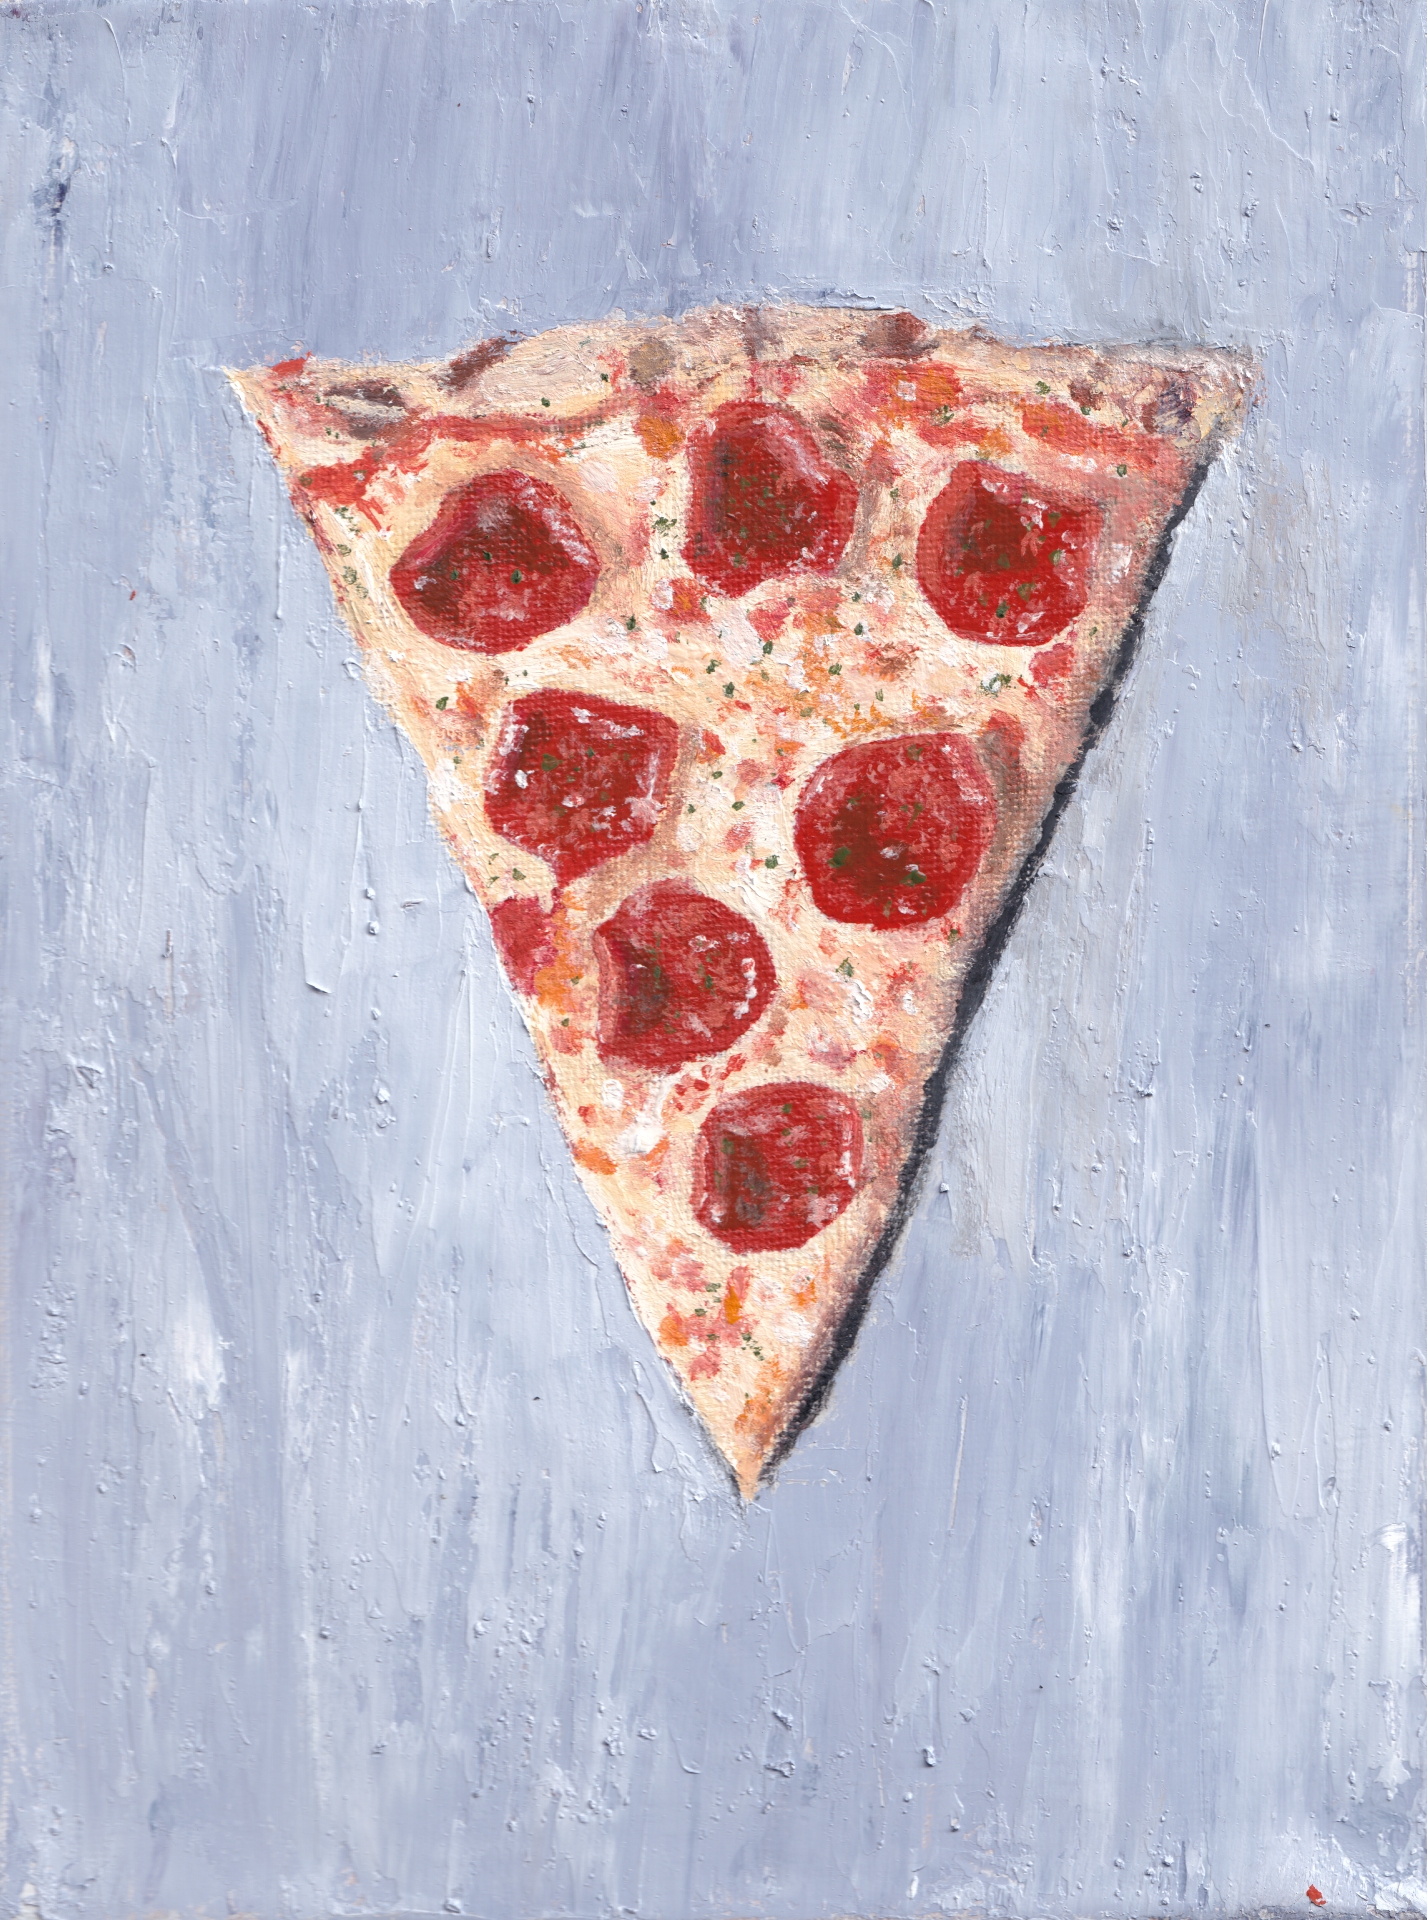 Malerei pizza pop art Gemälde Essen Lebensmittel Kunst auf Holz Ölgemälde Rems Murr Kreis Sulzbach an der Murr Alice Obermeier